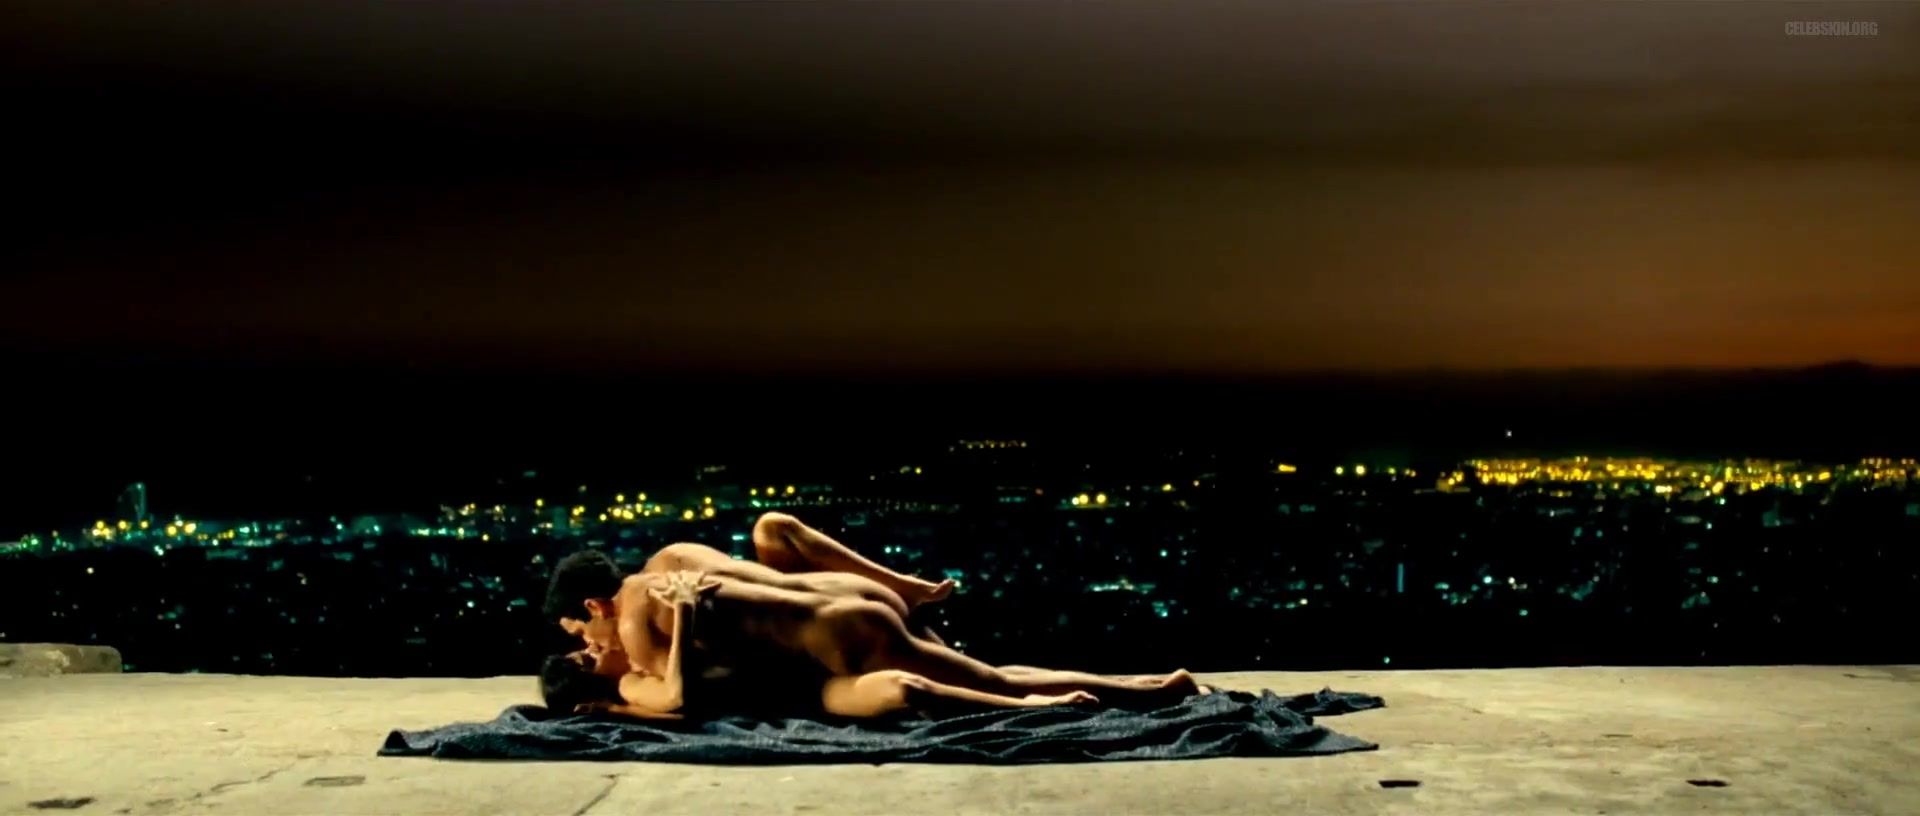 Roolons Clara Lago naked – Tengo ganas de ti (2012) (explicit nudity) Stripper - 2